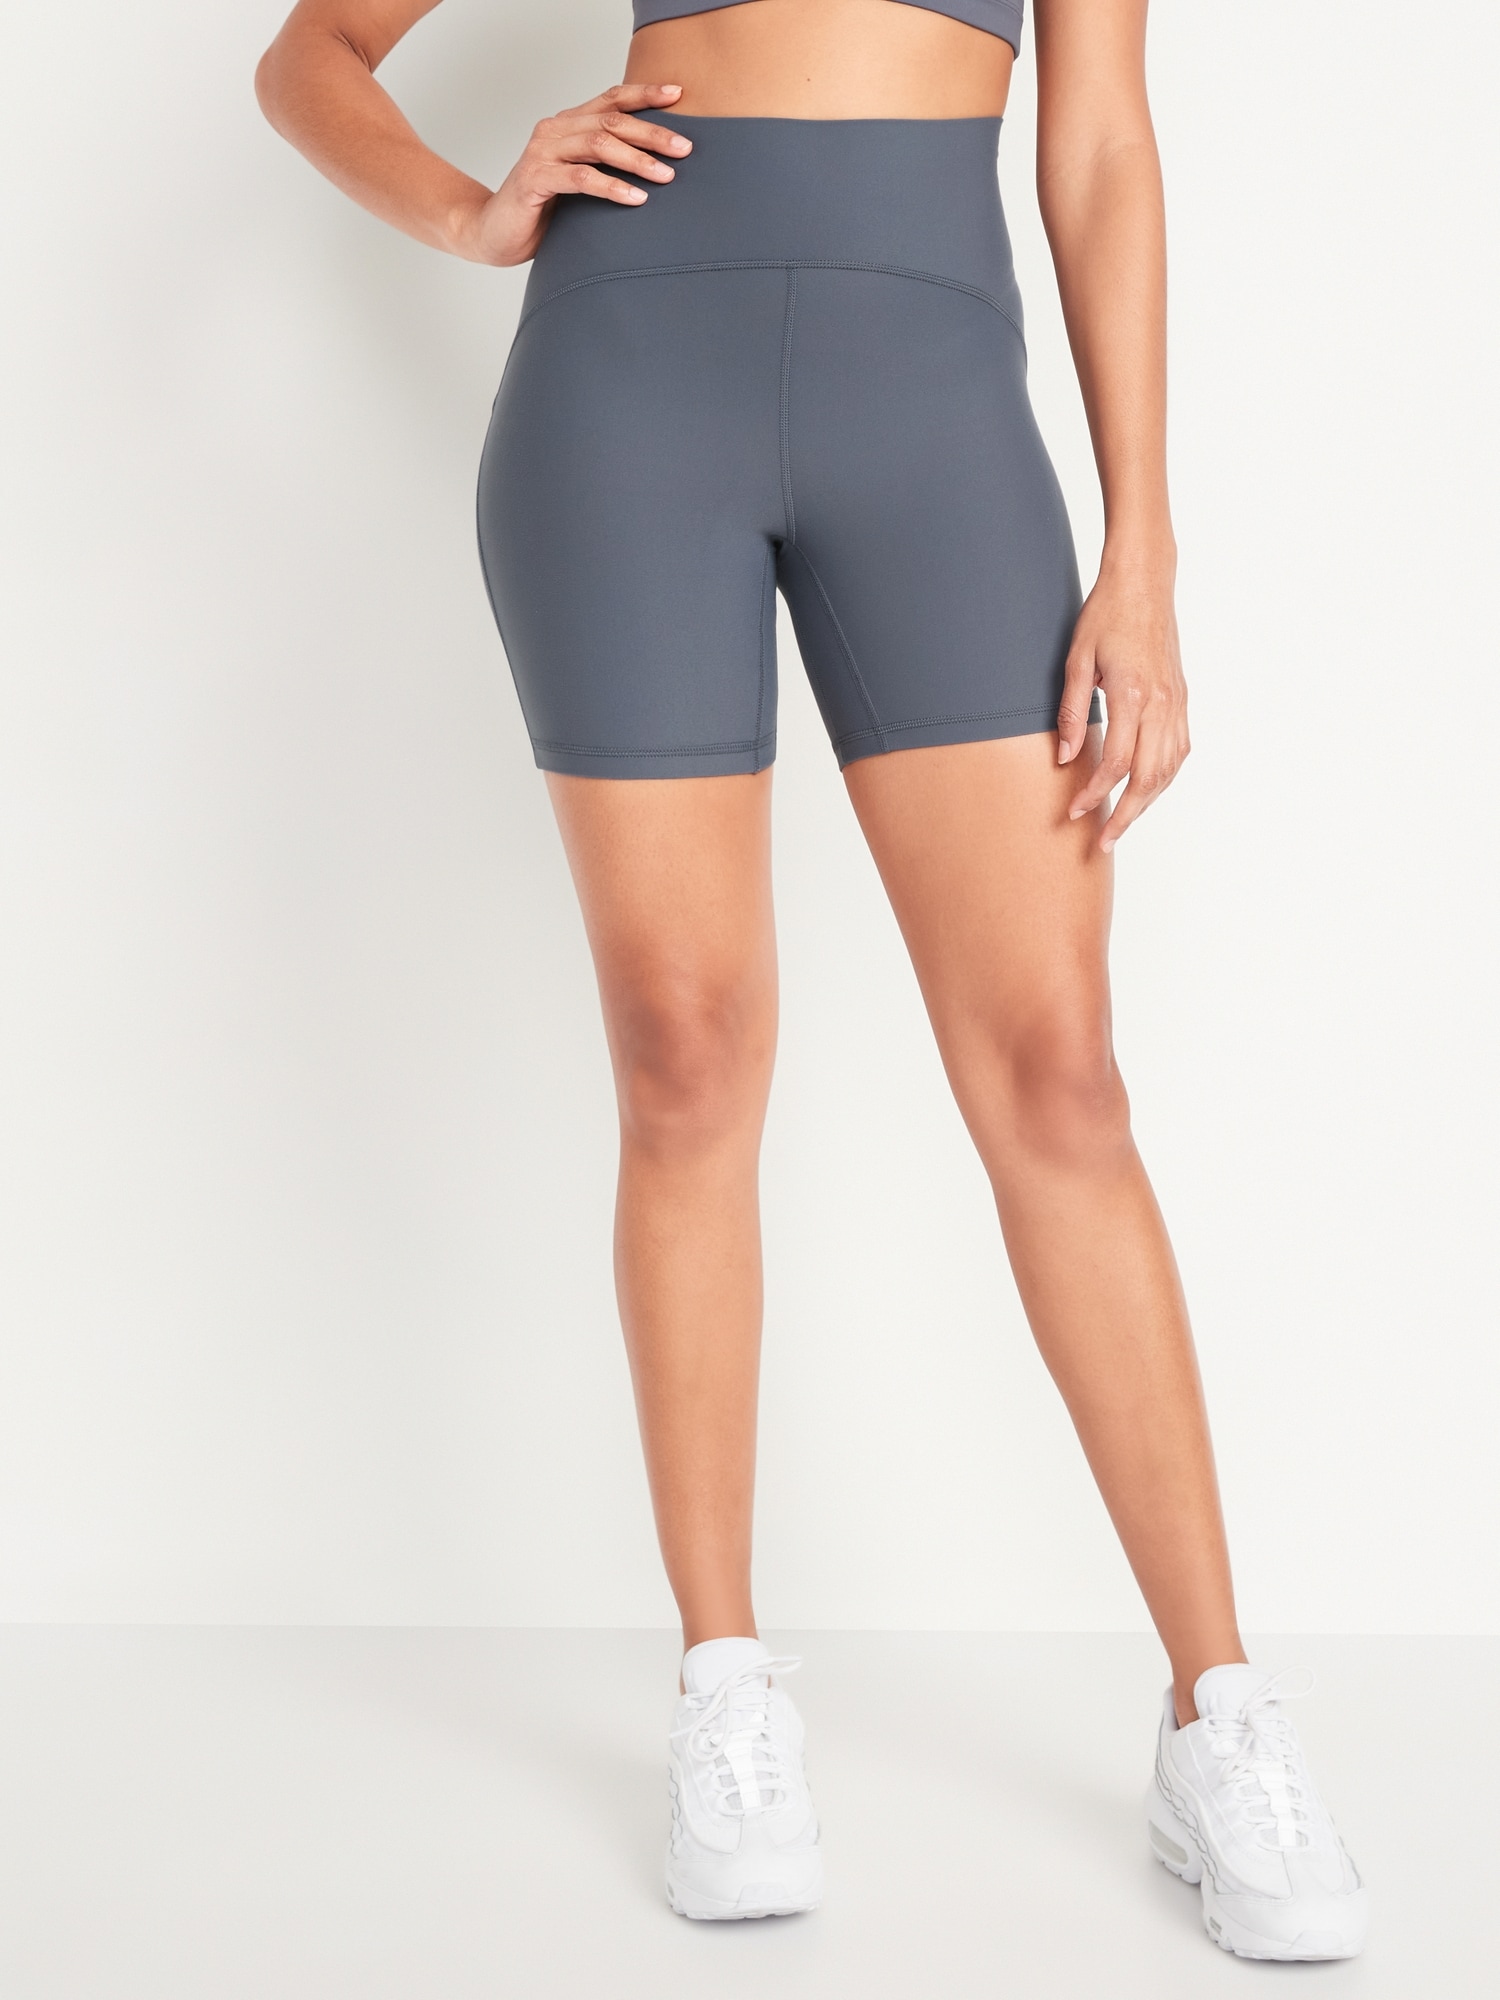 Old Navy NEW! Extra High-Waisted PowerLite Lycra ADAPTIV Biker Shorts for  Women - 6-inch inseam